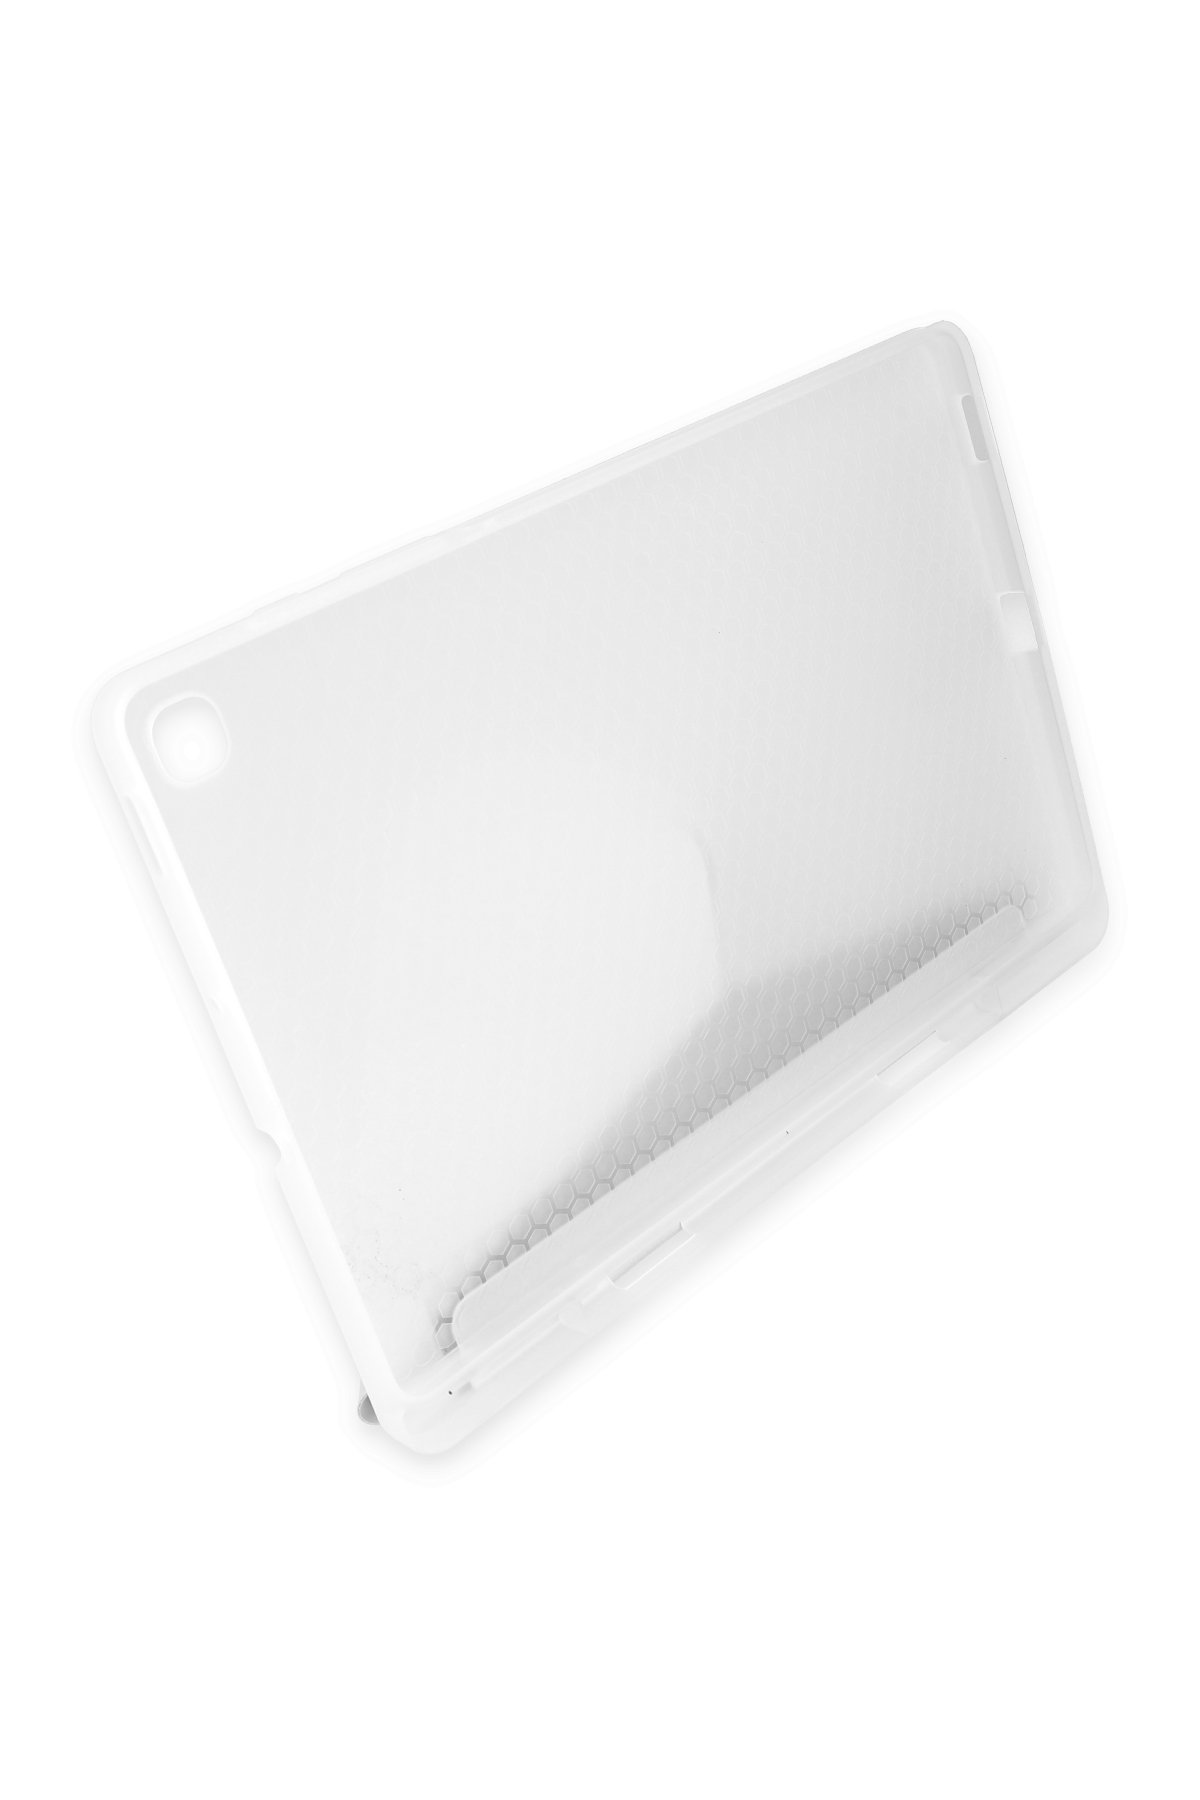 Newface iPad Pro 9.7 Kılıf Anti Şeffaf Tablet Silikon - Şeffaf